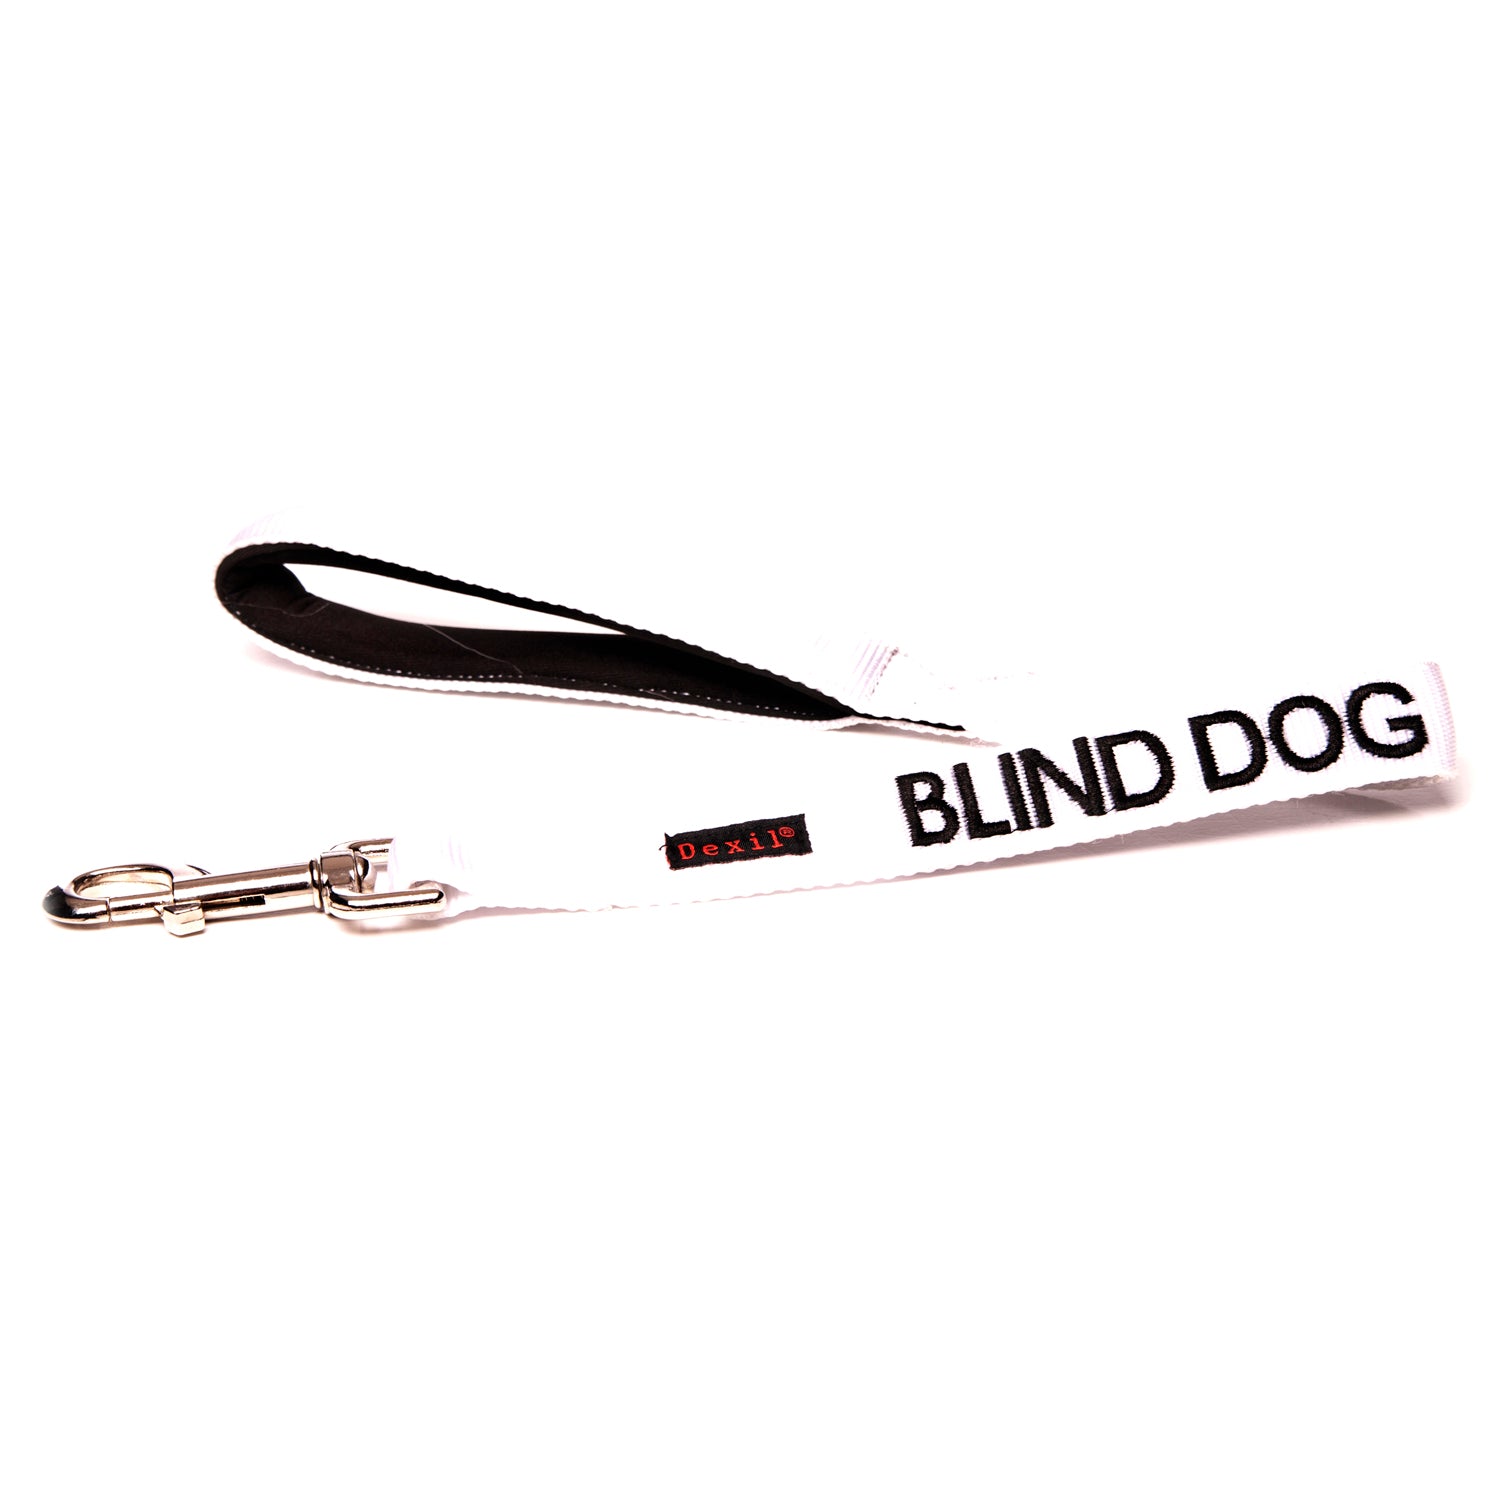 blind dog leads